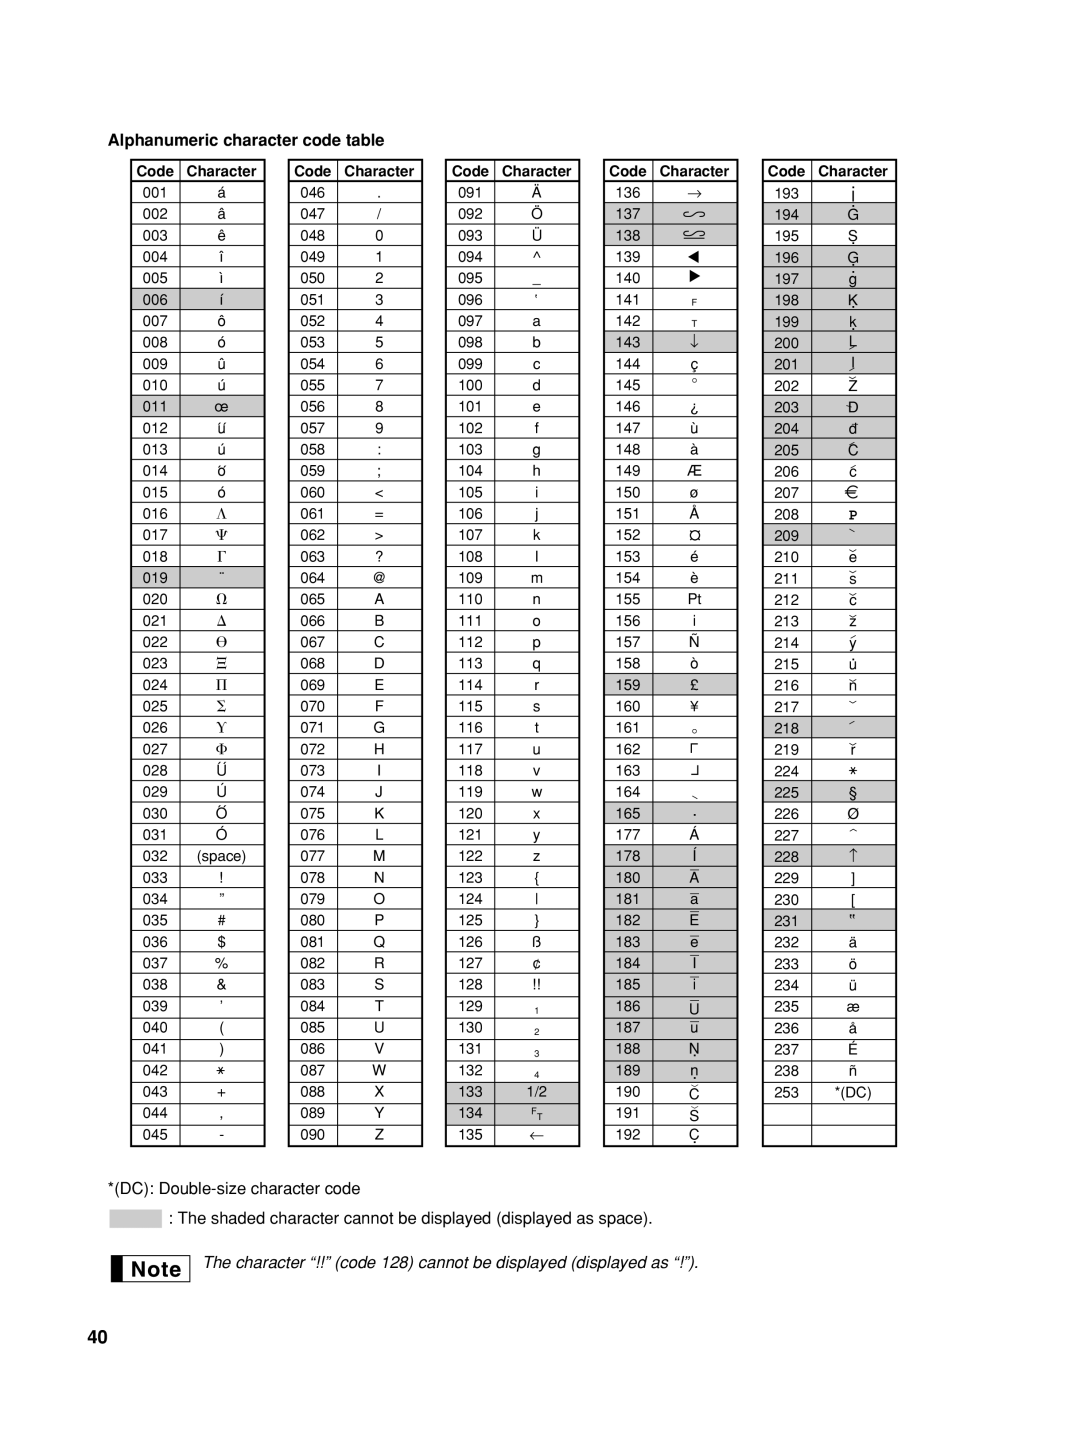 Sharp TINSZ2600RCZZ instruction manual 231 ”, Alphanumeric character code table, Code Character 